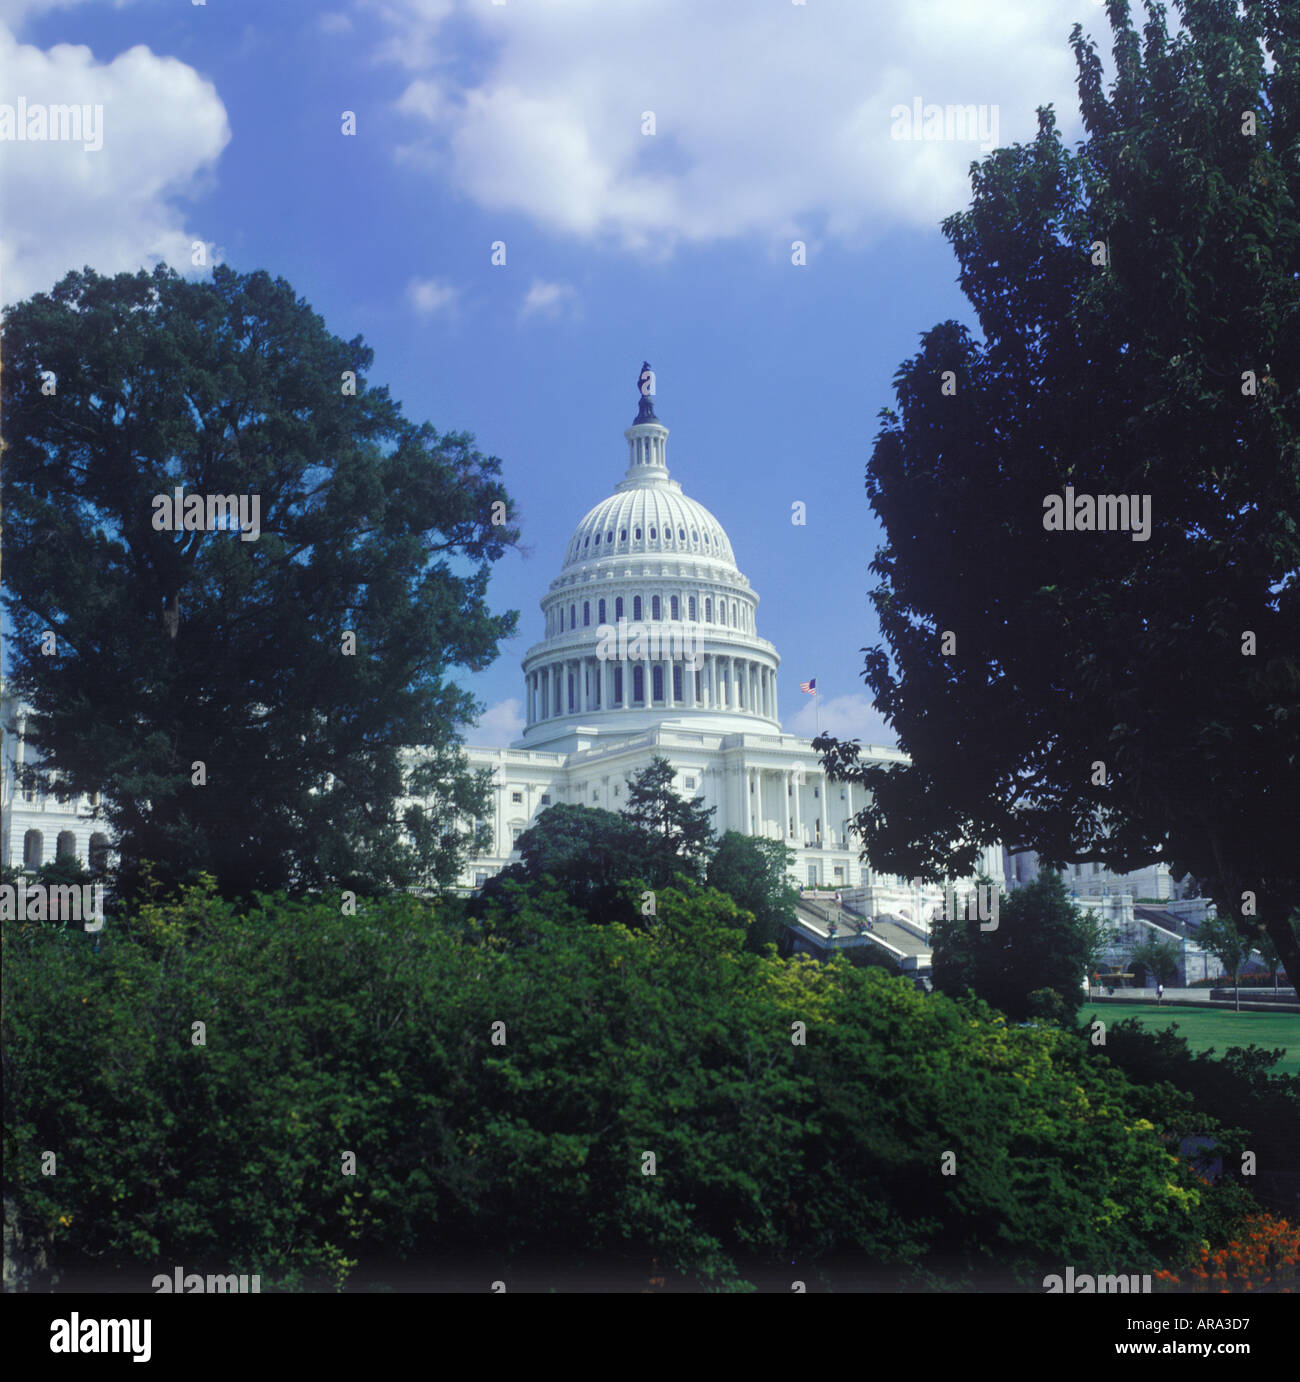 United States Senate Chamber Washington Stock Photos & United States Senate Chamber ...1300 x 1382